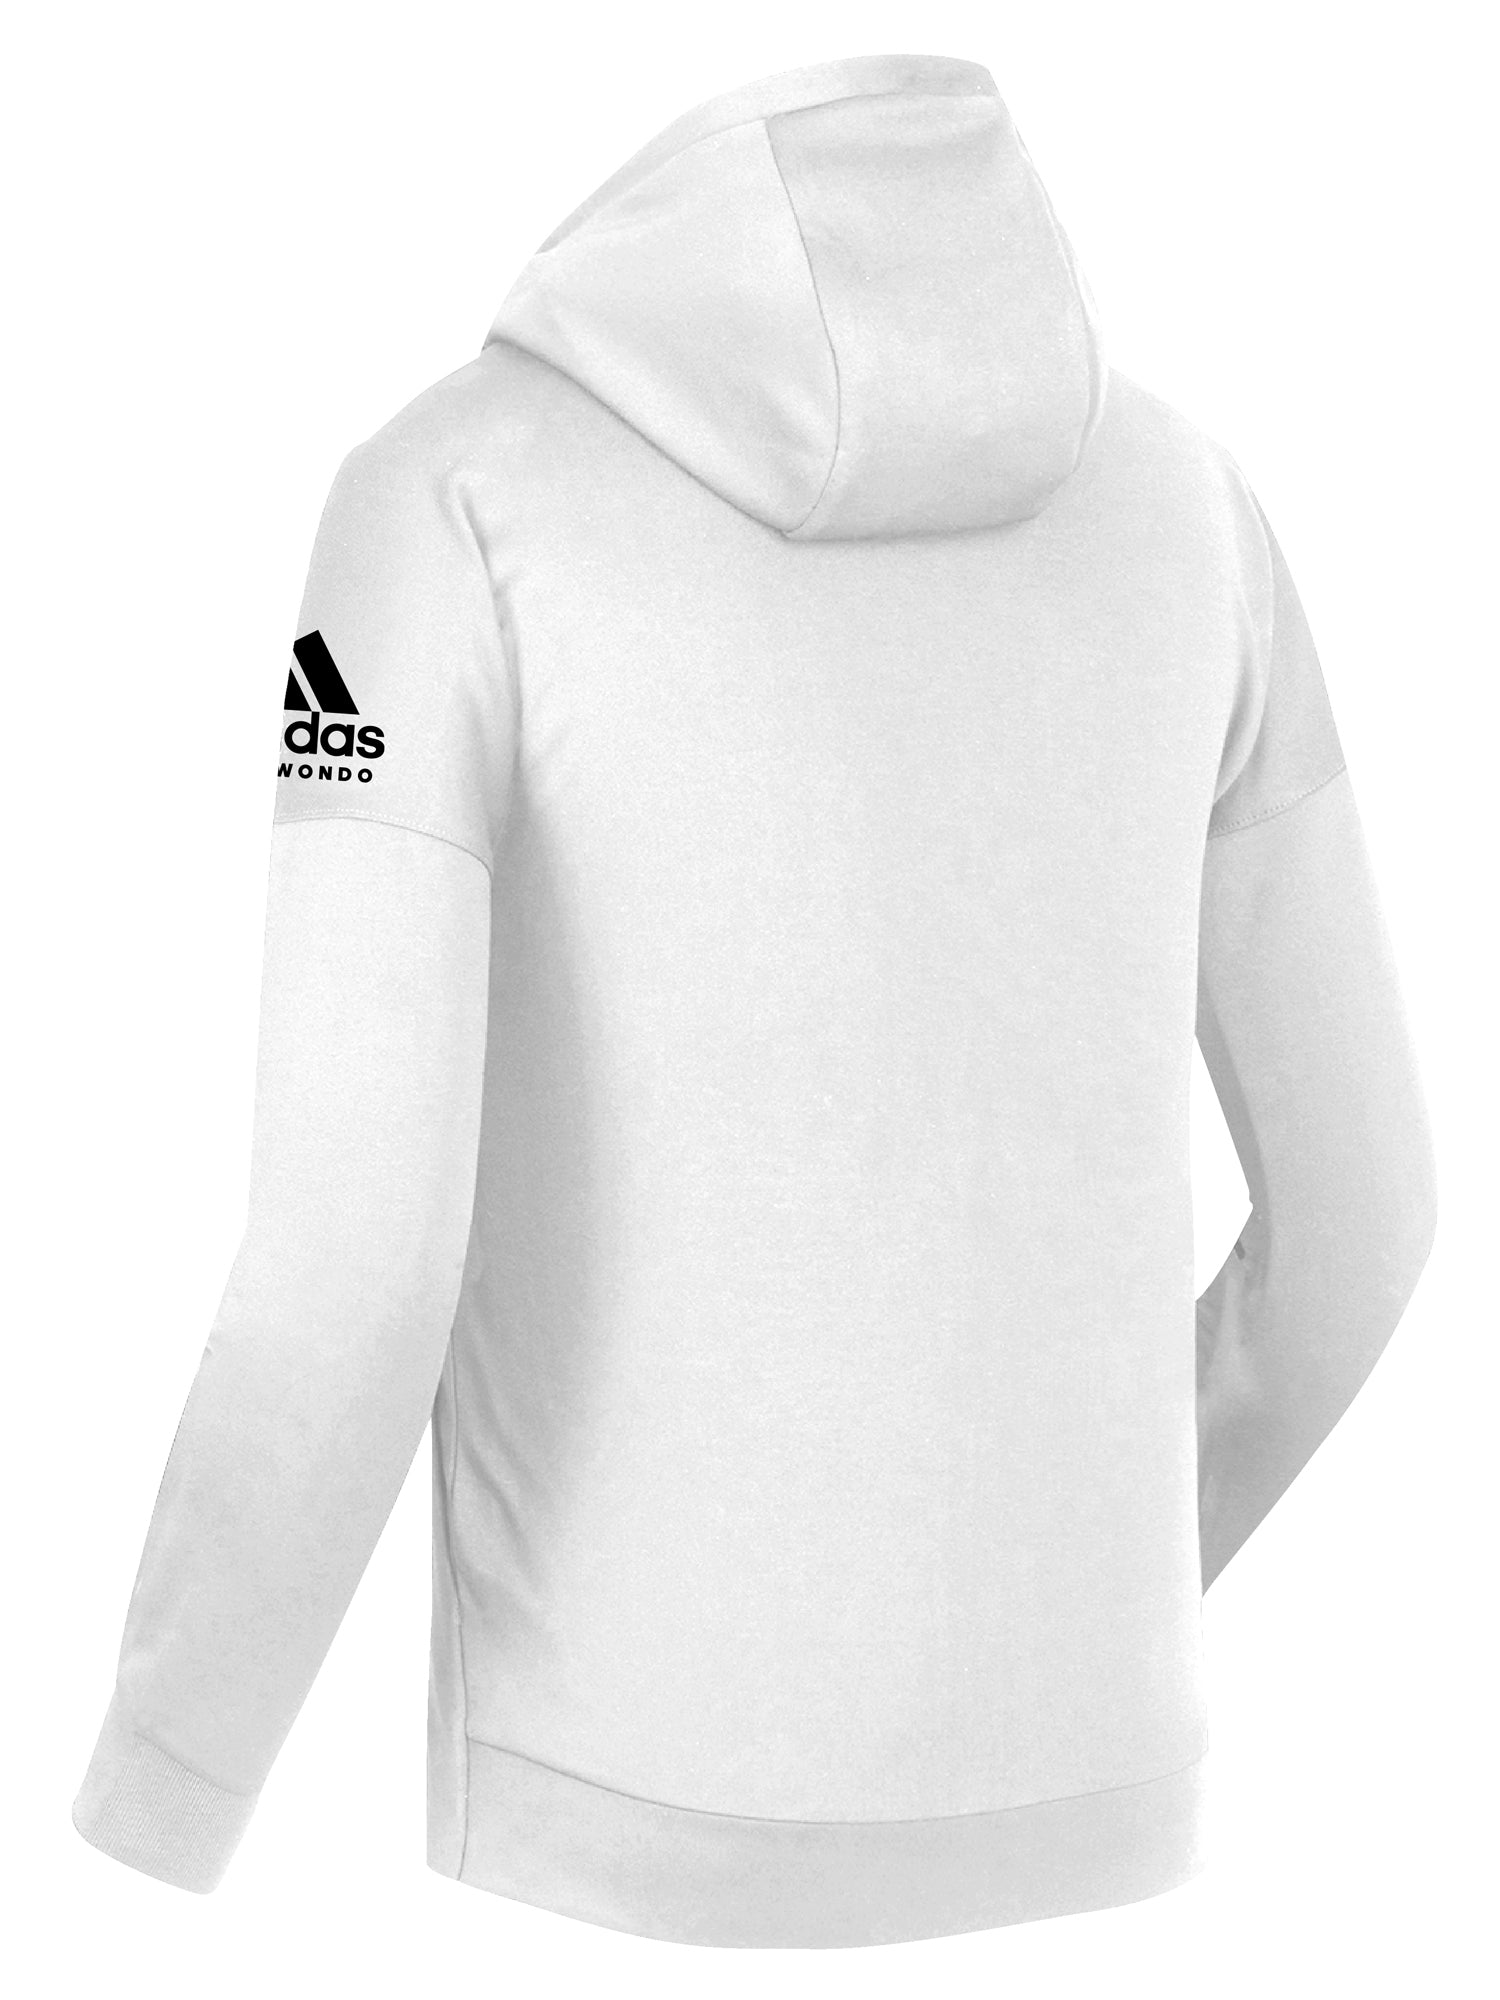 adidas Taekwondo Full Zipped Hooded Fleece Lined Sweatshirt Jacket